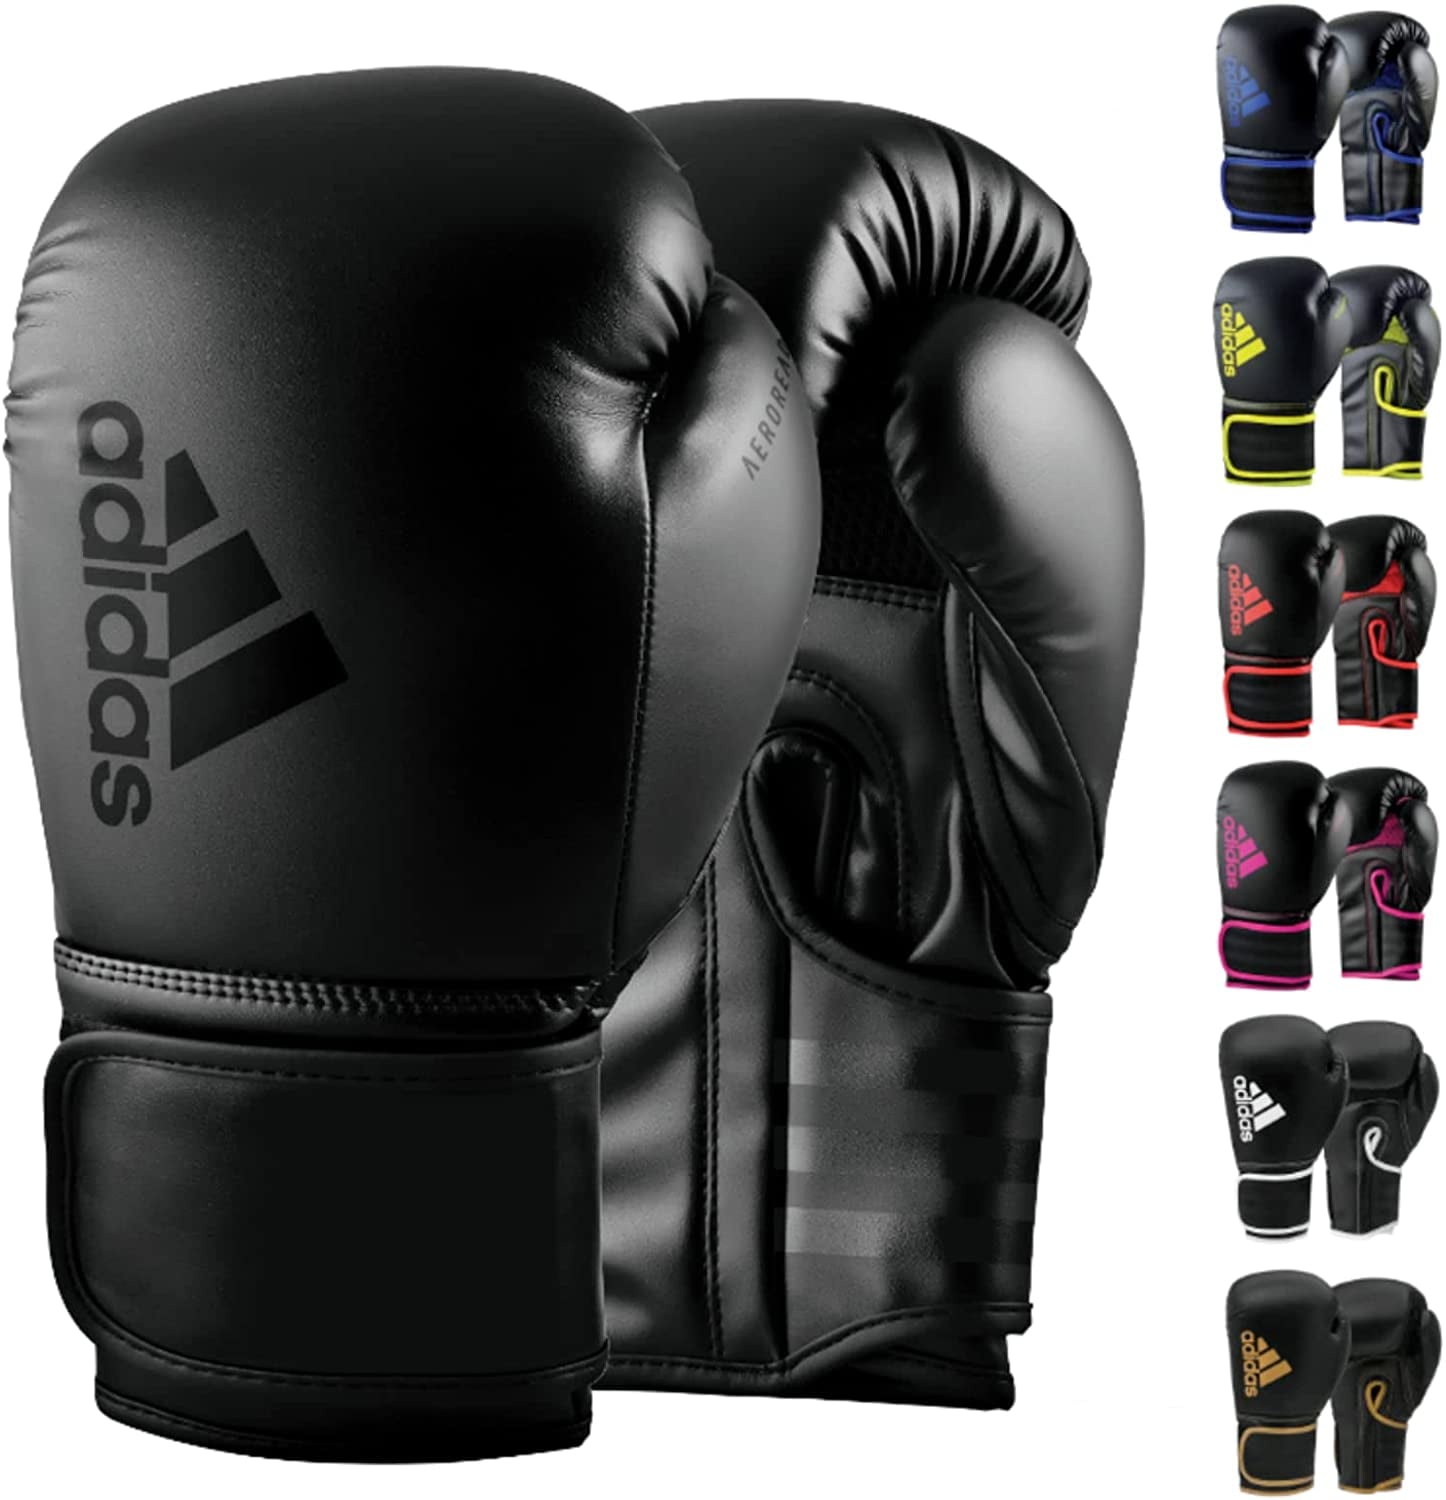 Secretario negar vehículo Adidas Hybrid 80 Boxing Gloves, pair set - Training Gloves for Kickboxing -  Sparring Gloves for Men, Women and Kids - Walmart.com